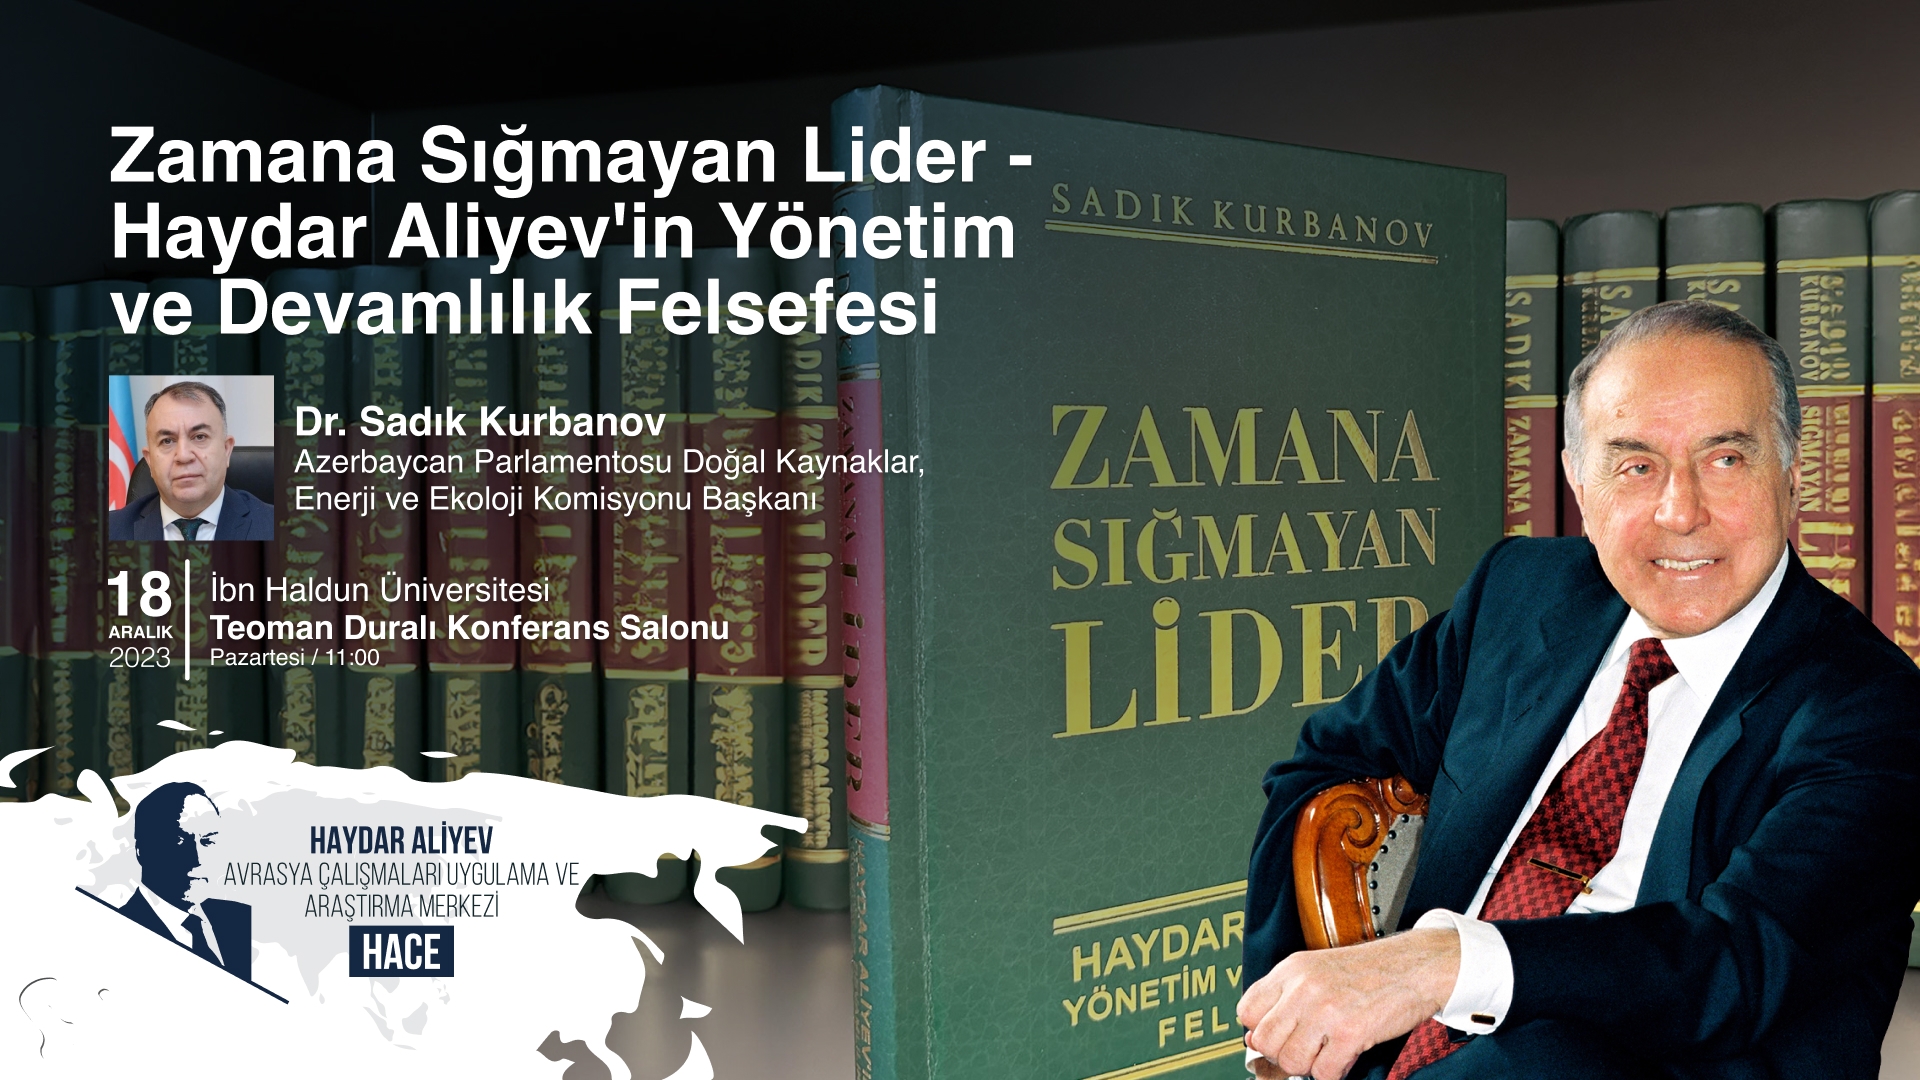 Haydar Aliyev's Philosophy of Governance and Continuity